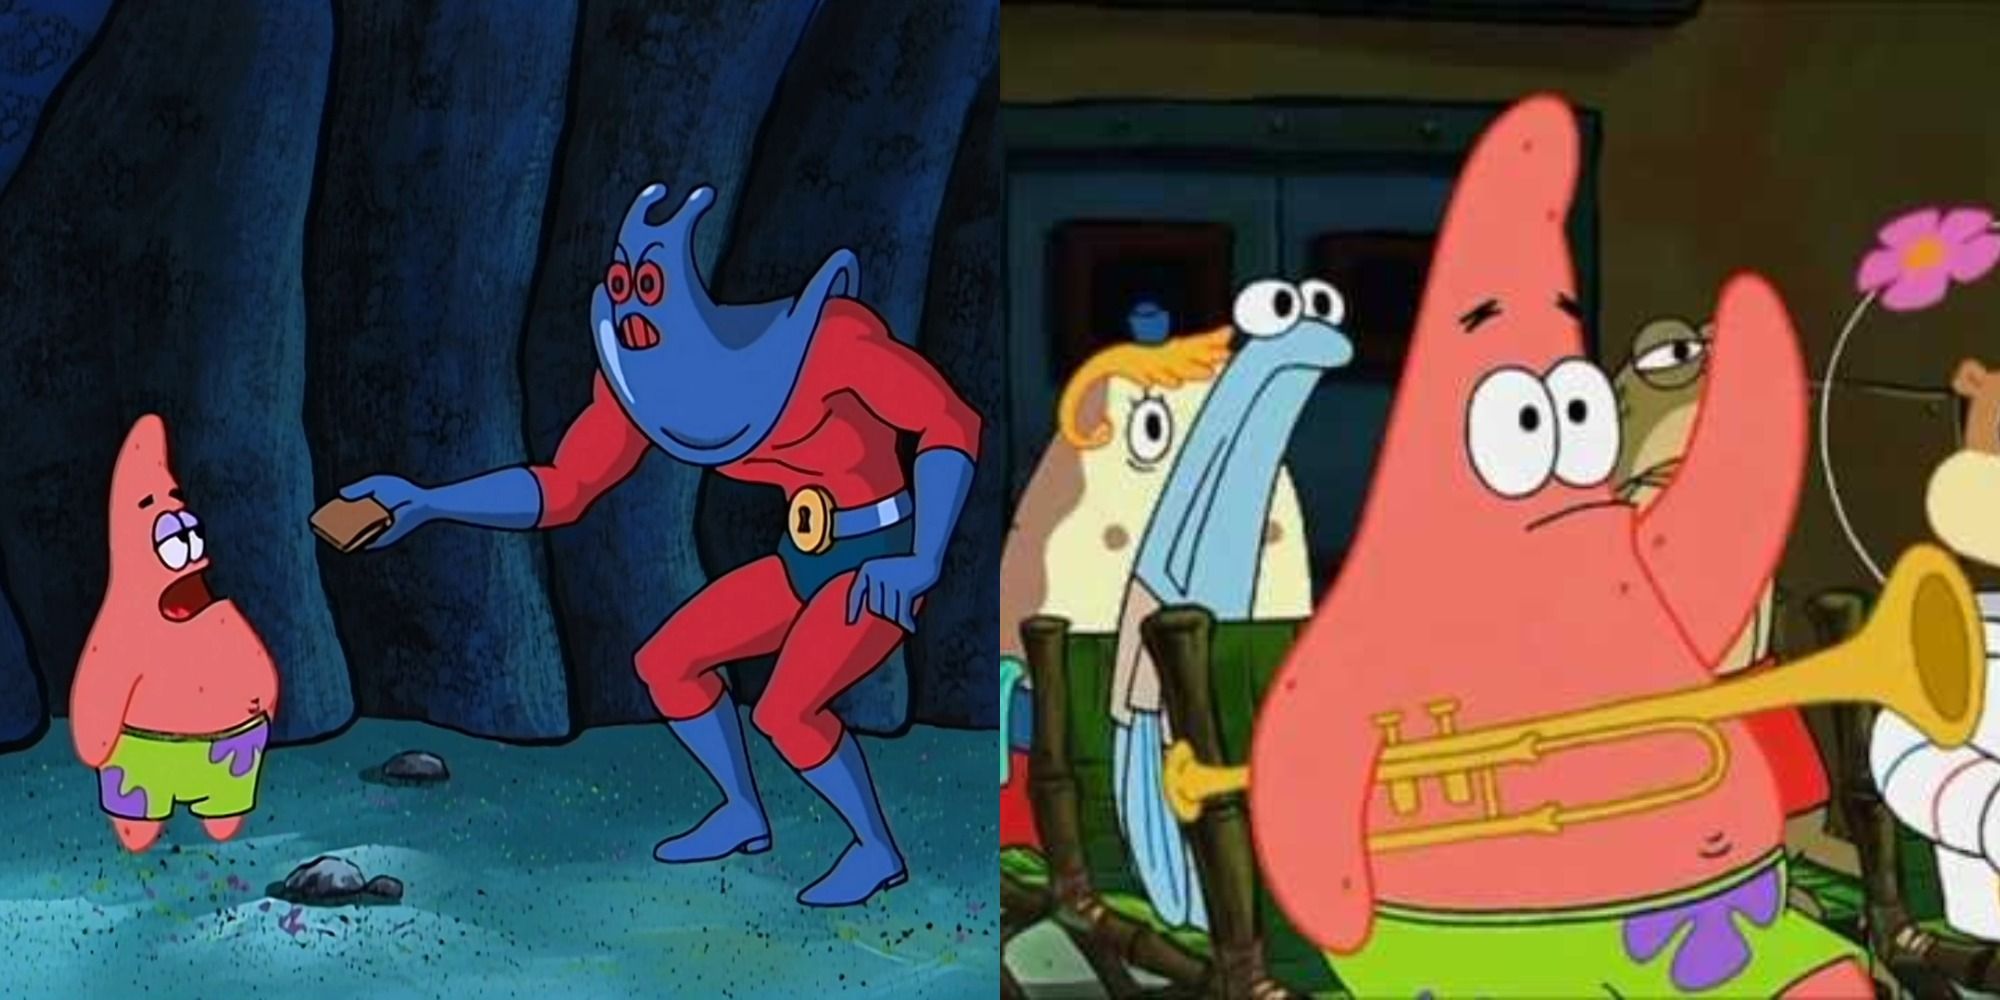 angry spongebob and patrick